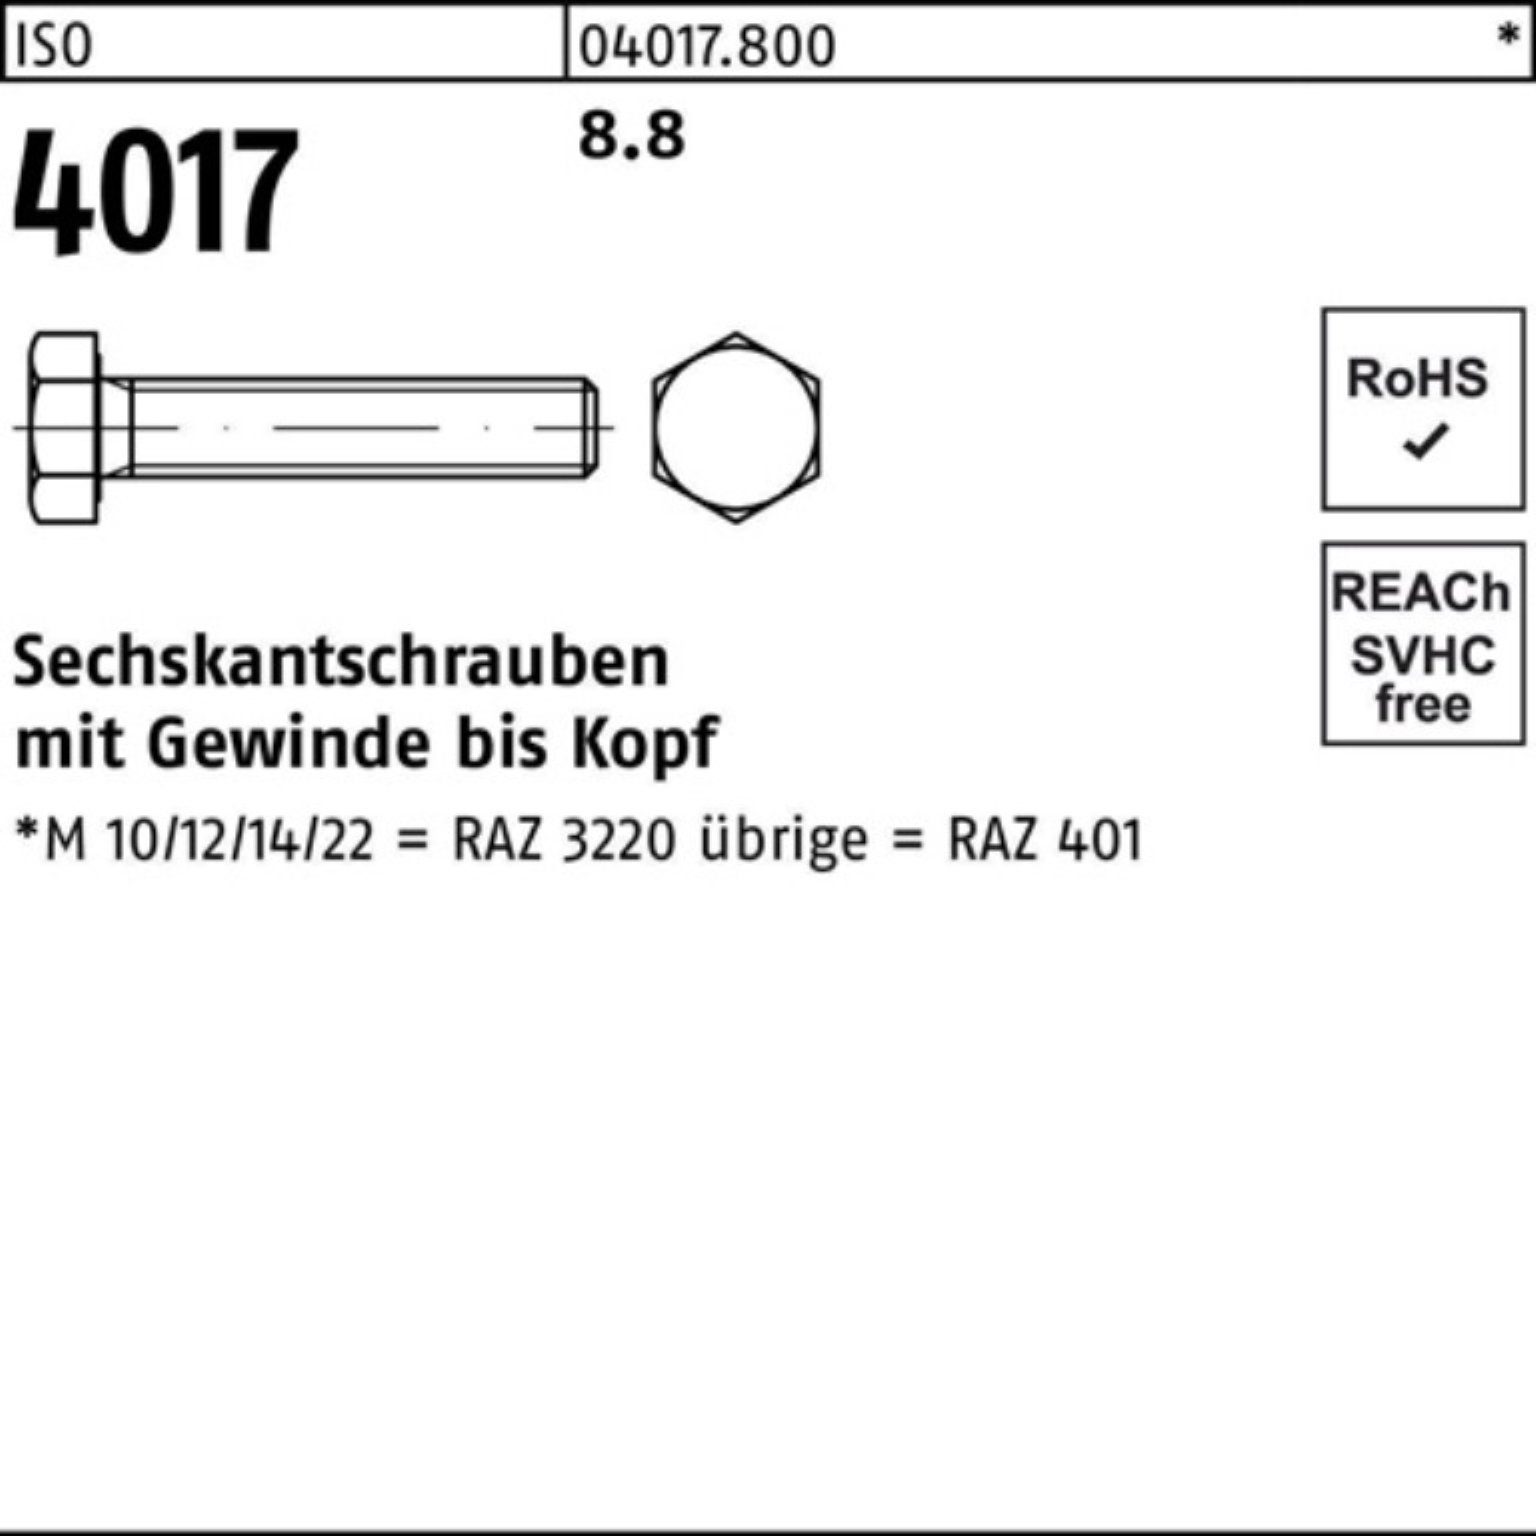 Bufab Sechskantschraube 100er Pack M33x 1 VG 4017 4017 ISO 8.8 Stück 40 ISO Sechskantschraube